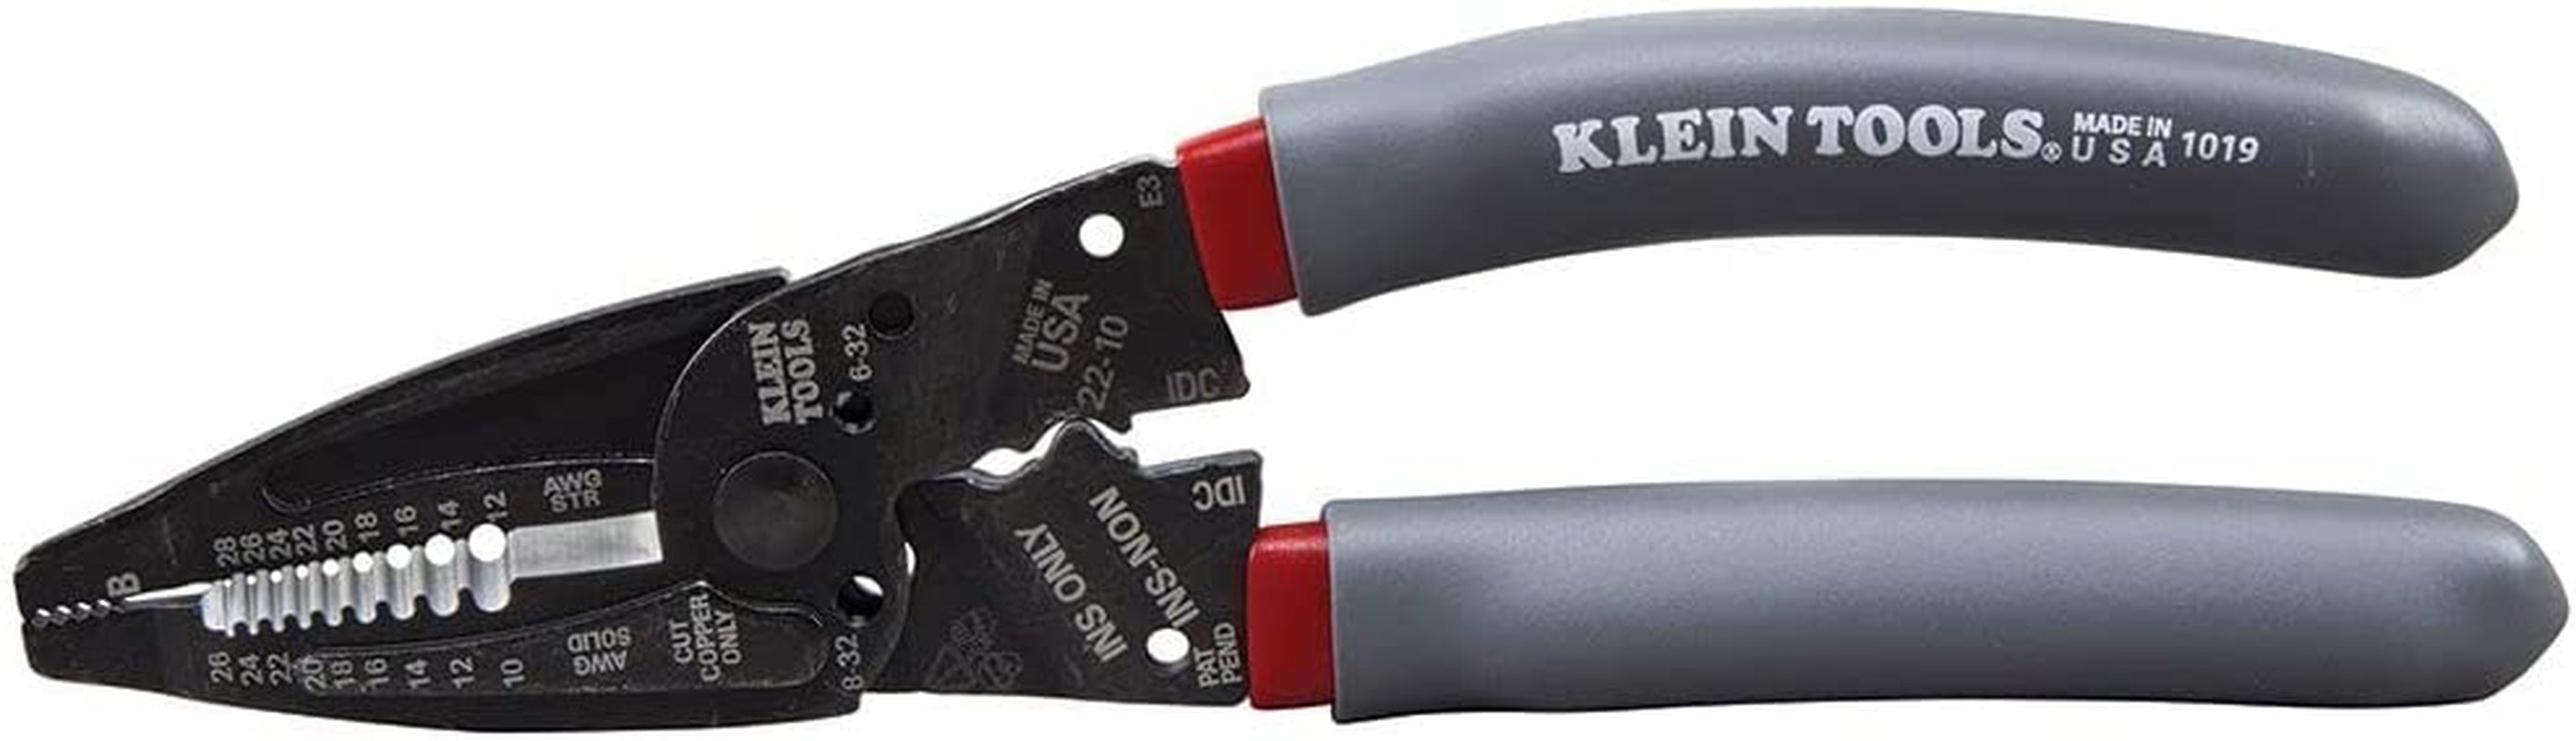 KLEIN TOOLS, Klein Tools 1019 Klein Kurve Wire Stripper/Crimper/Cutter for B and IDC Connectors, Terminals, More